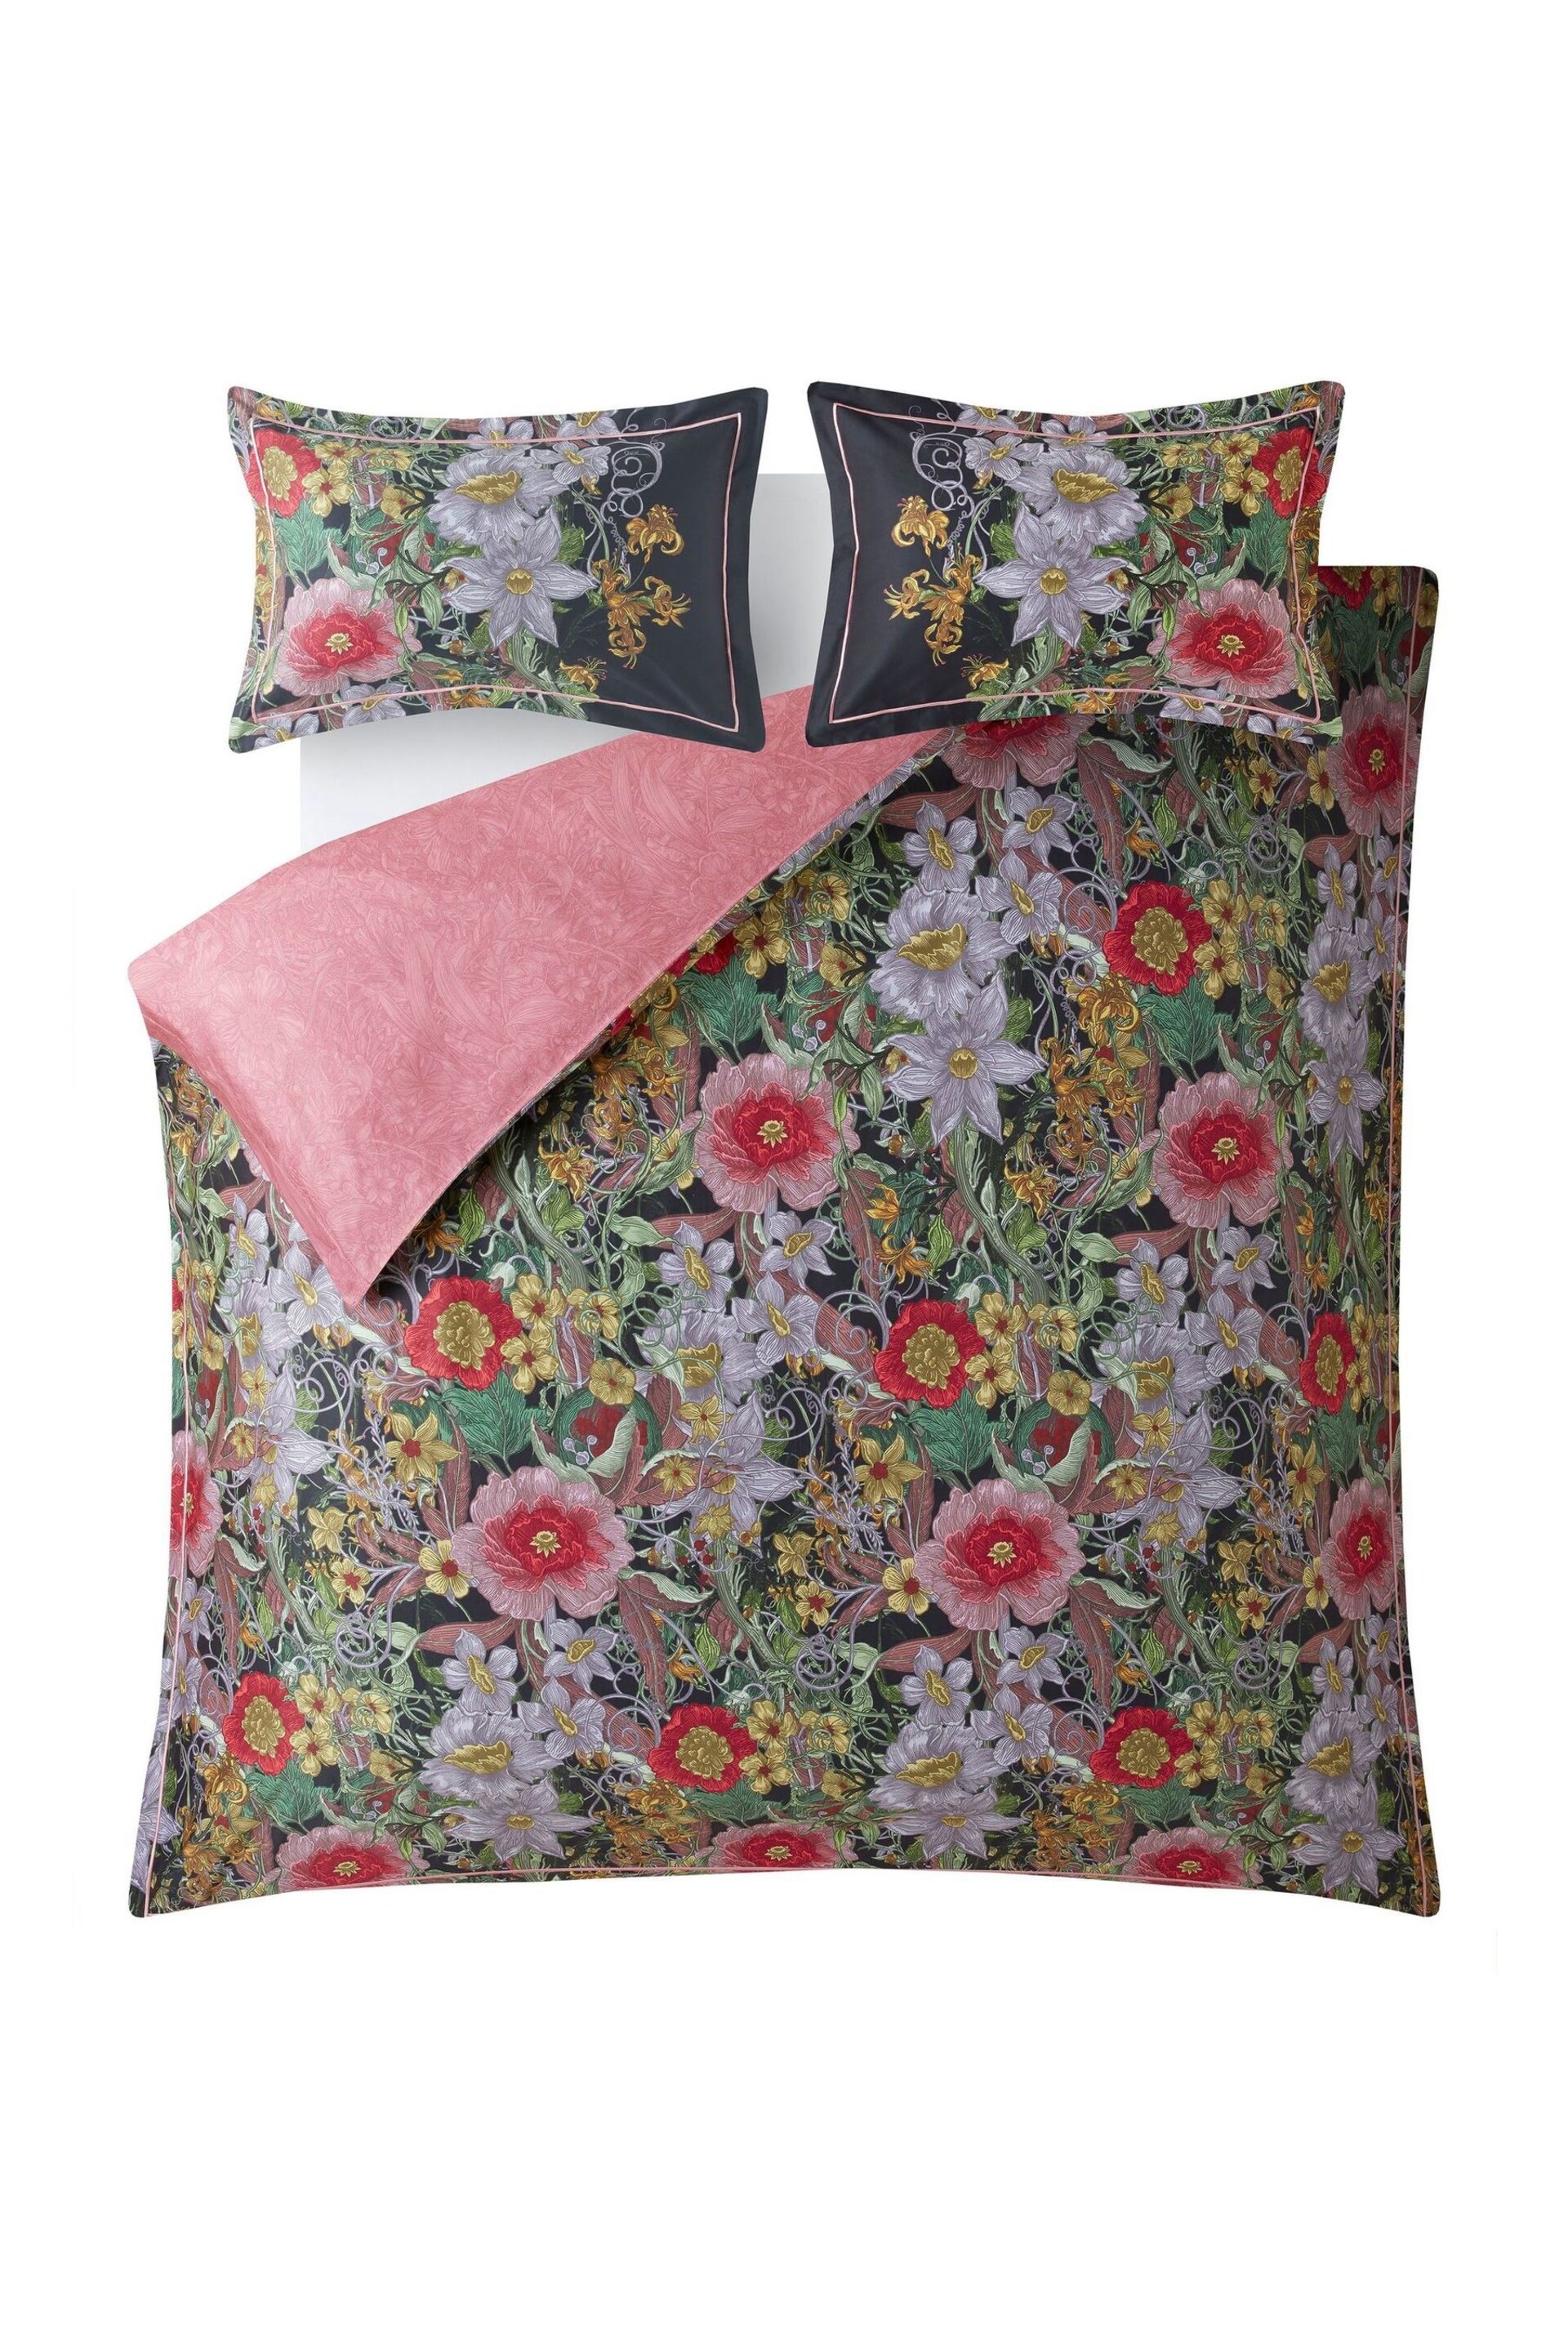 Timorous Beasties Midnight Berkeley Blooms Duvet Cover and Pillowcase Set - Image 4 of 8